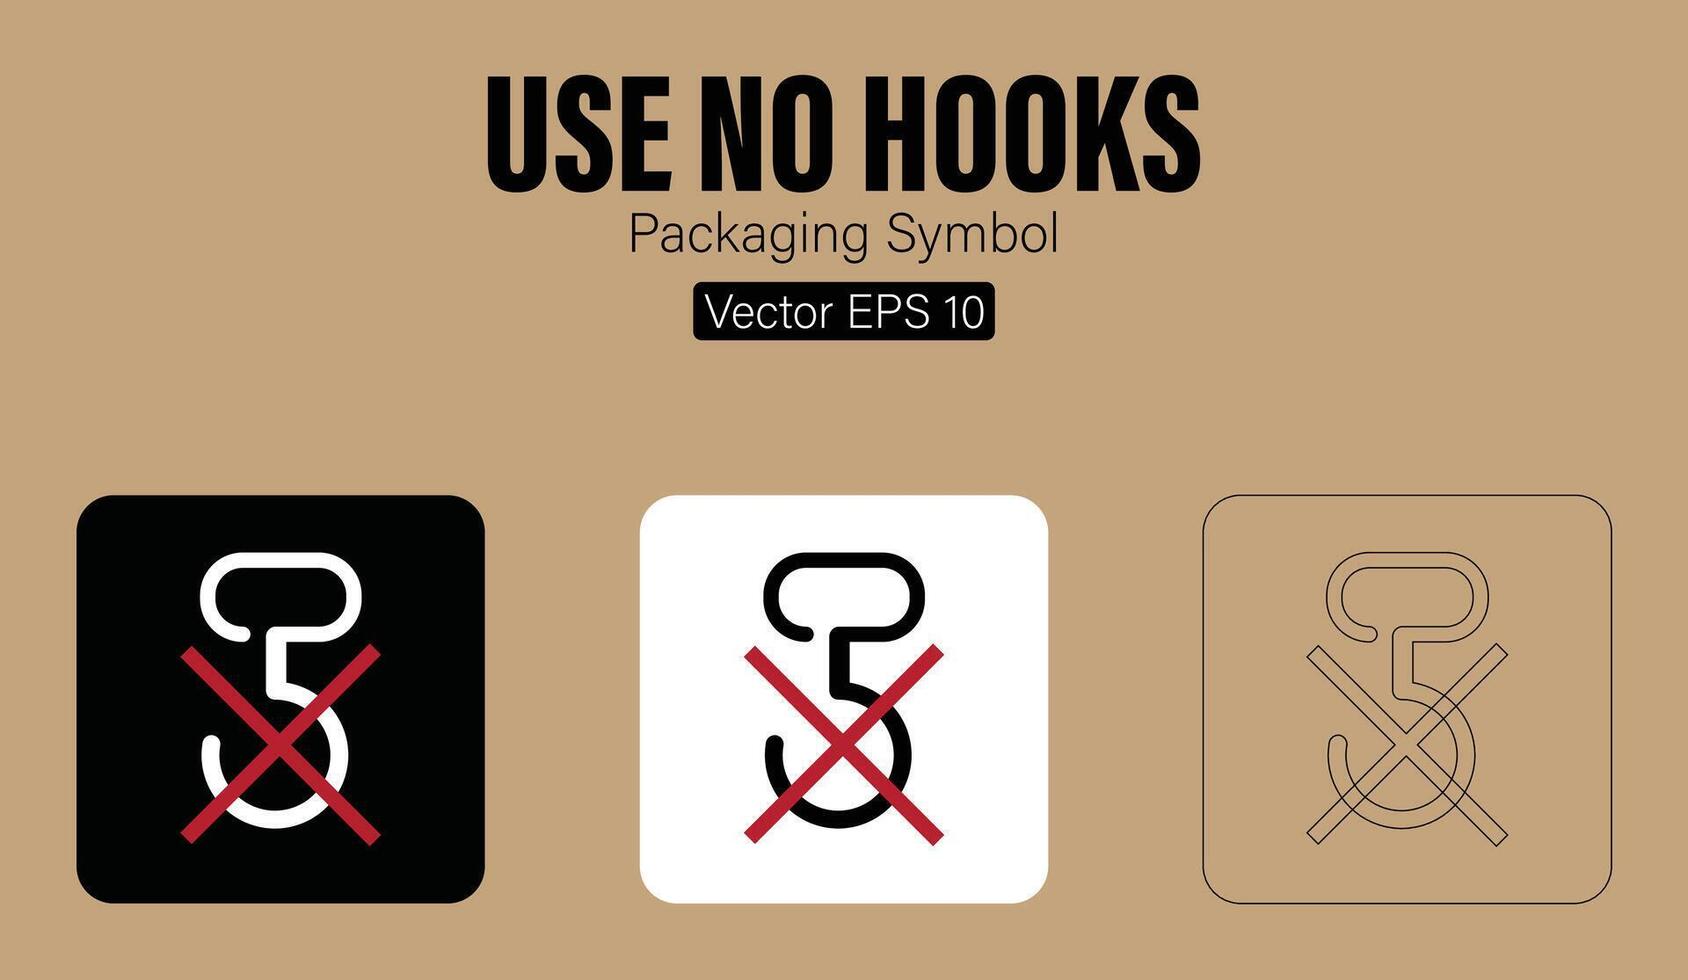 Do Not Use Hooks Packaging Symbol vector